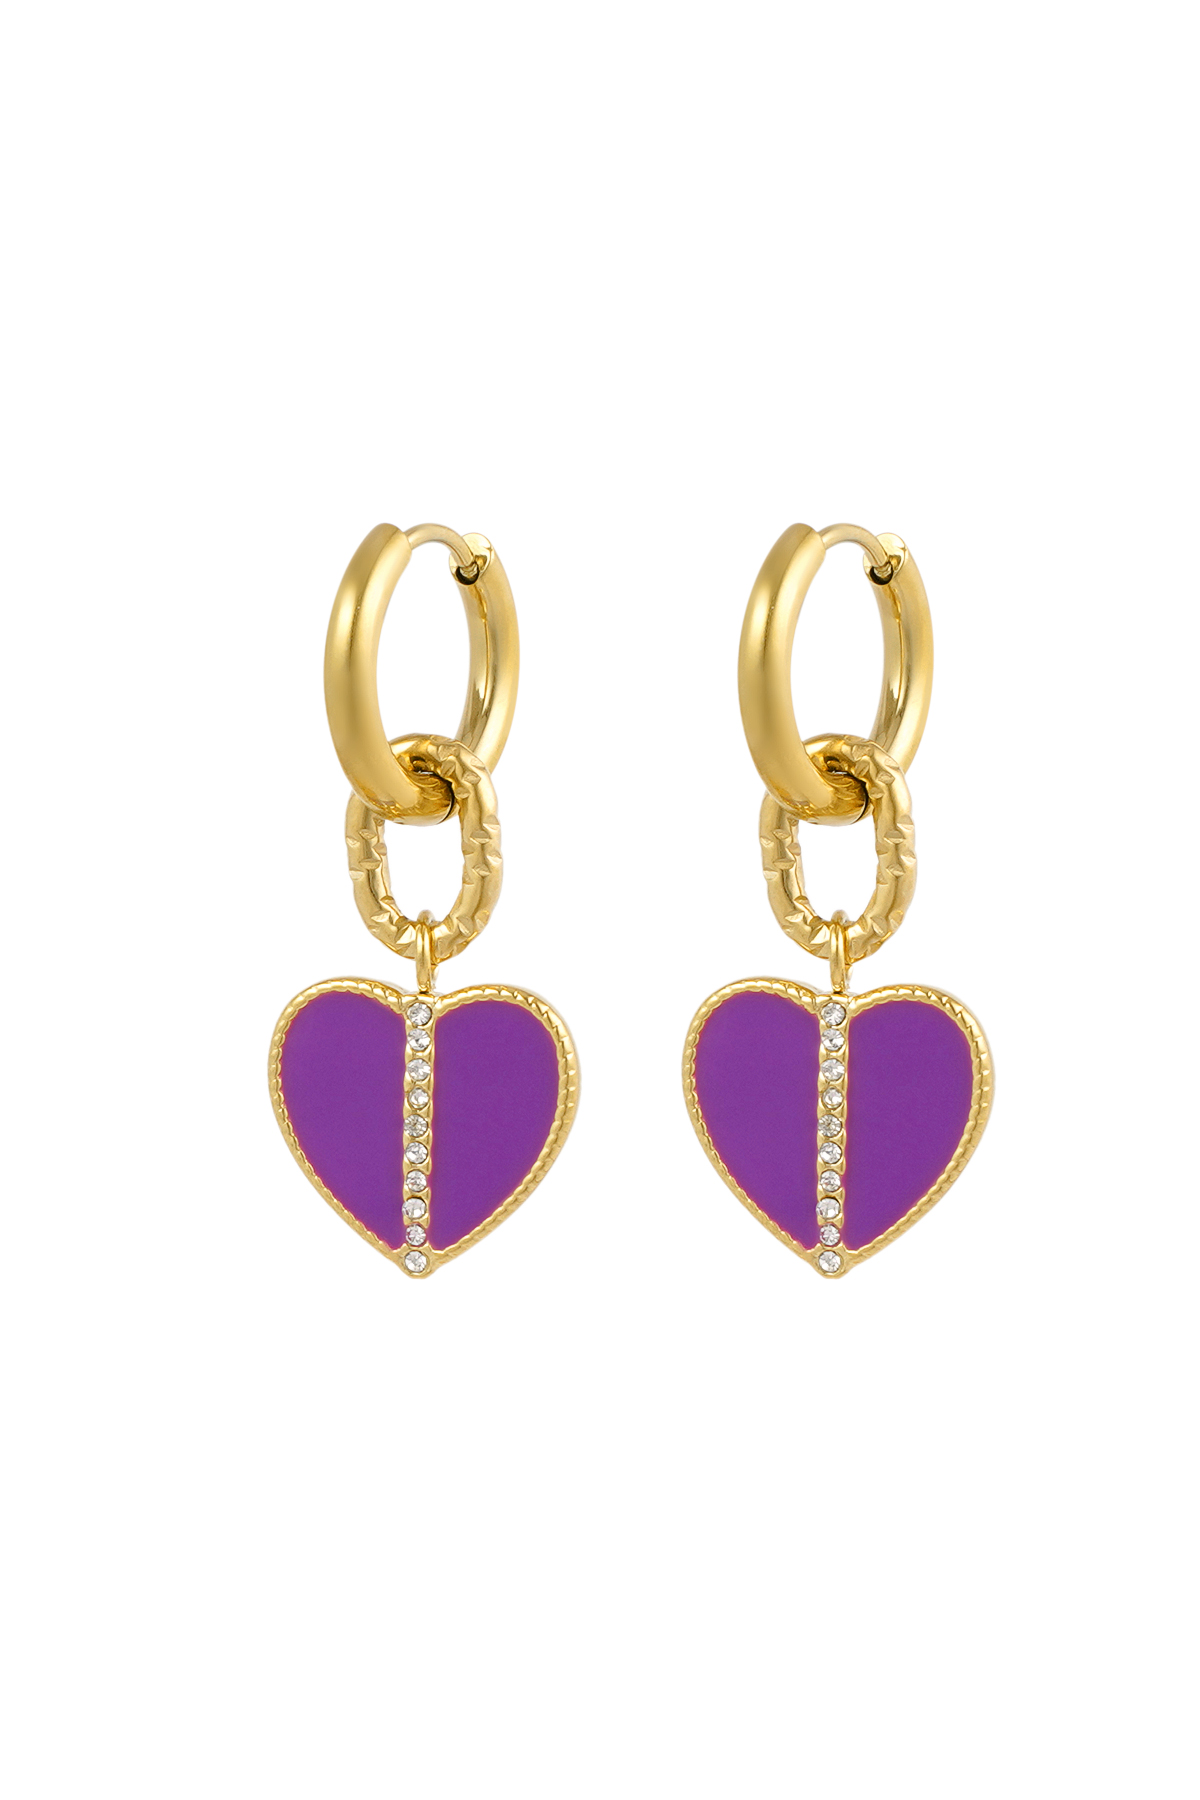 Earrings dancing dare - purple h5 